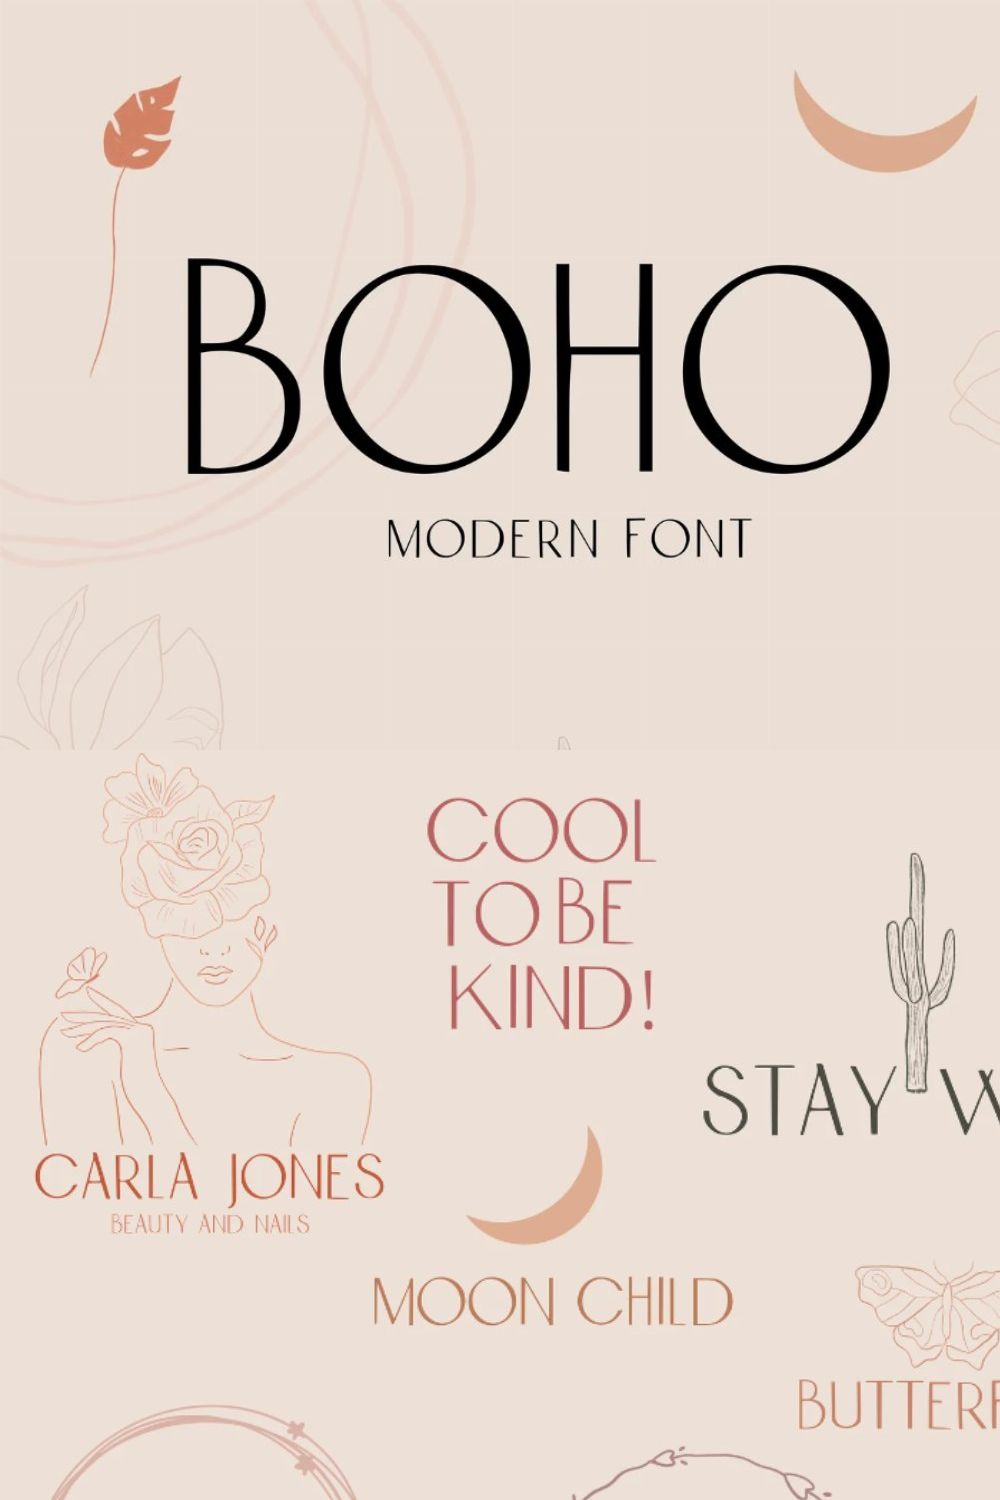 Boho Modern Font | Boho Logo Font pinterest preview image.